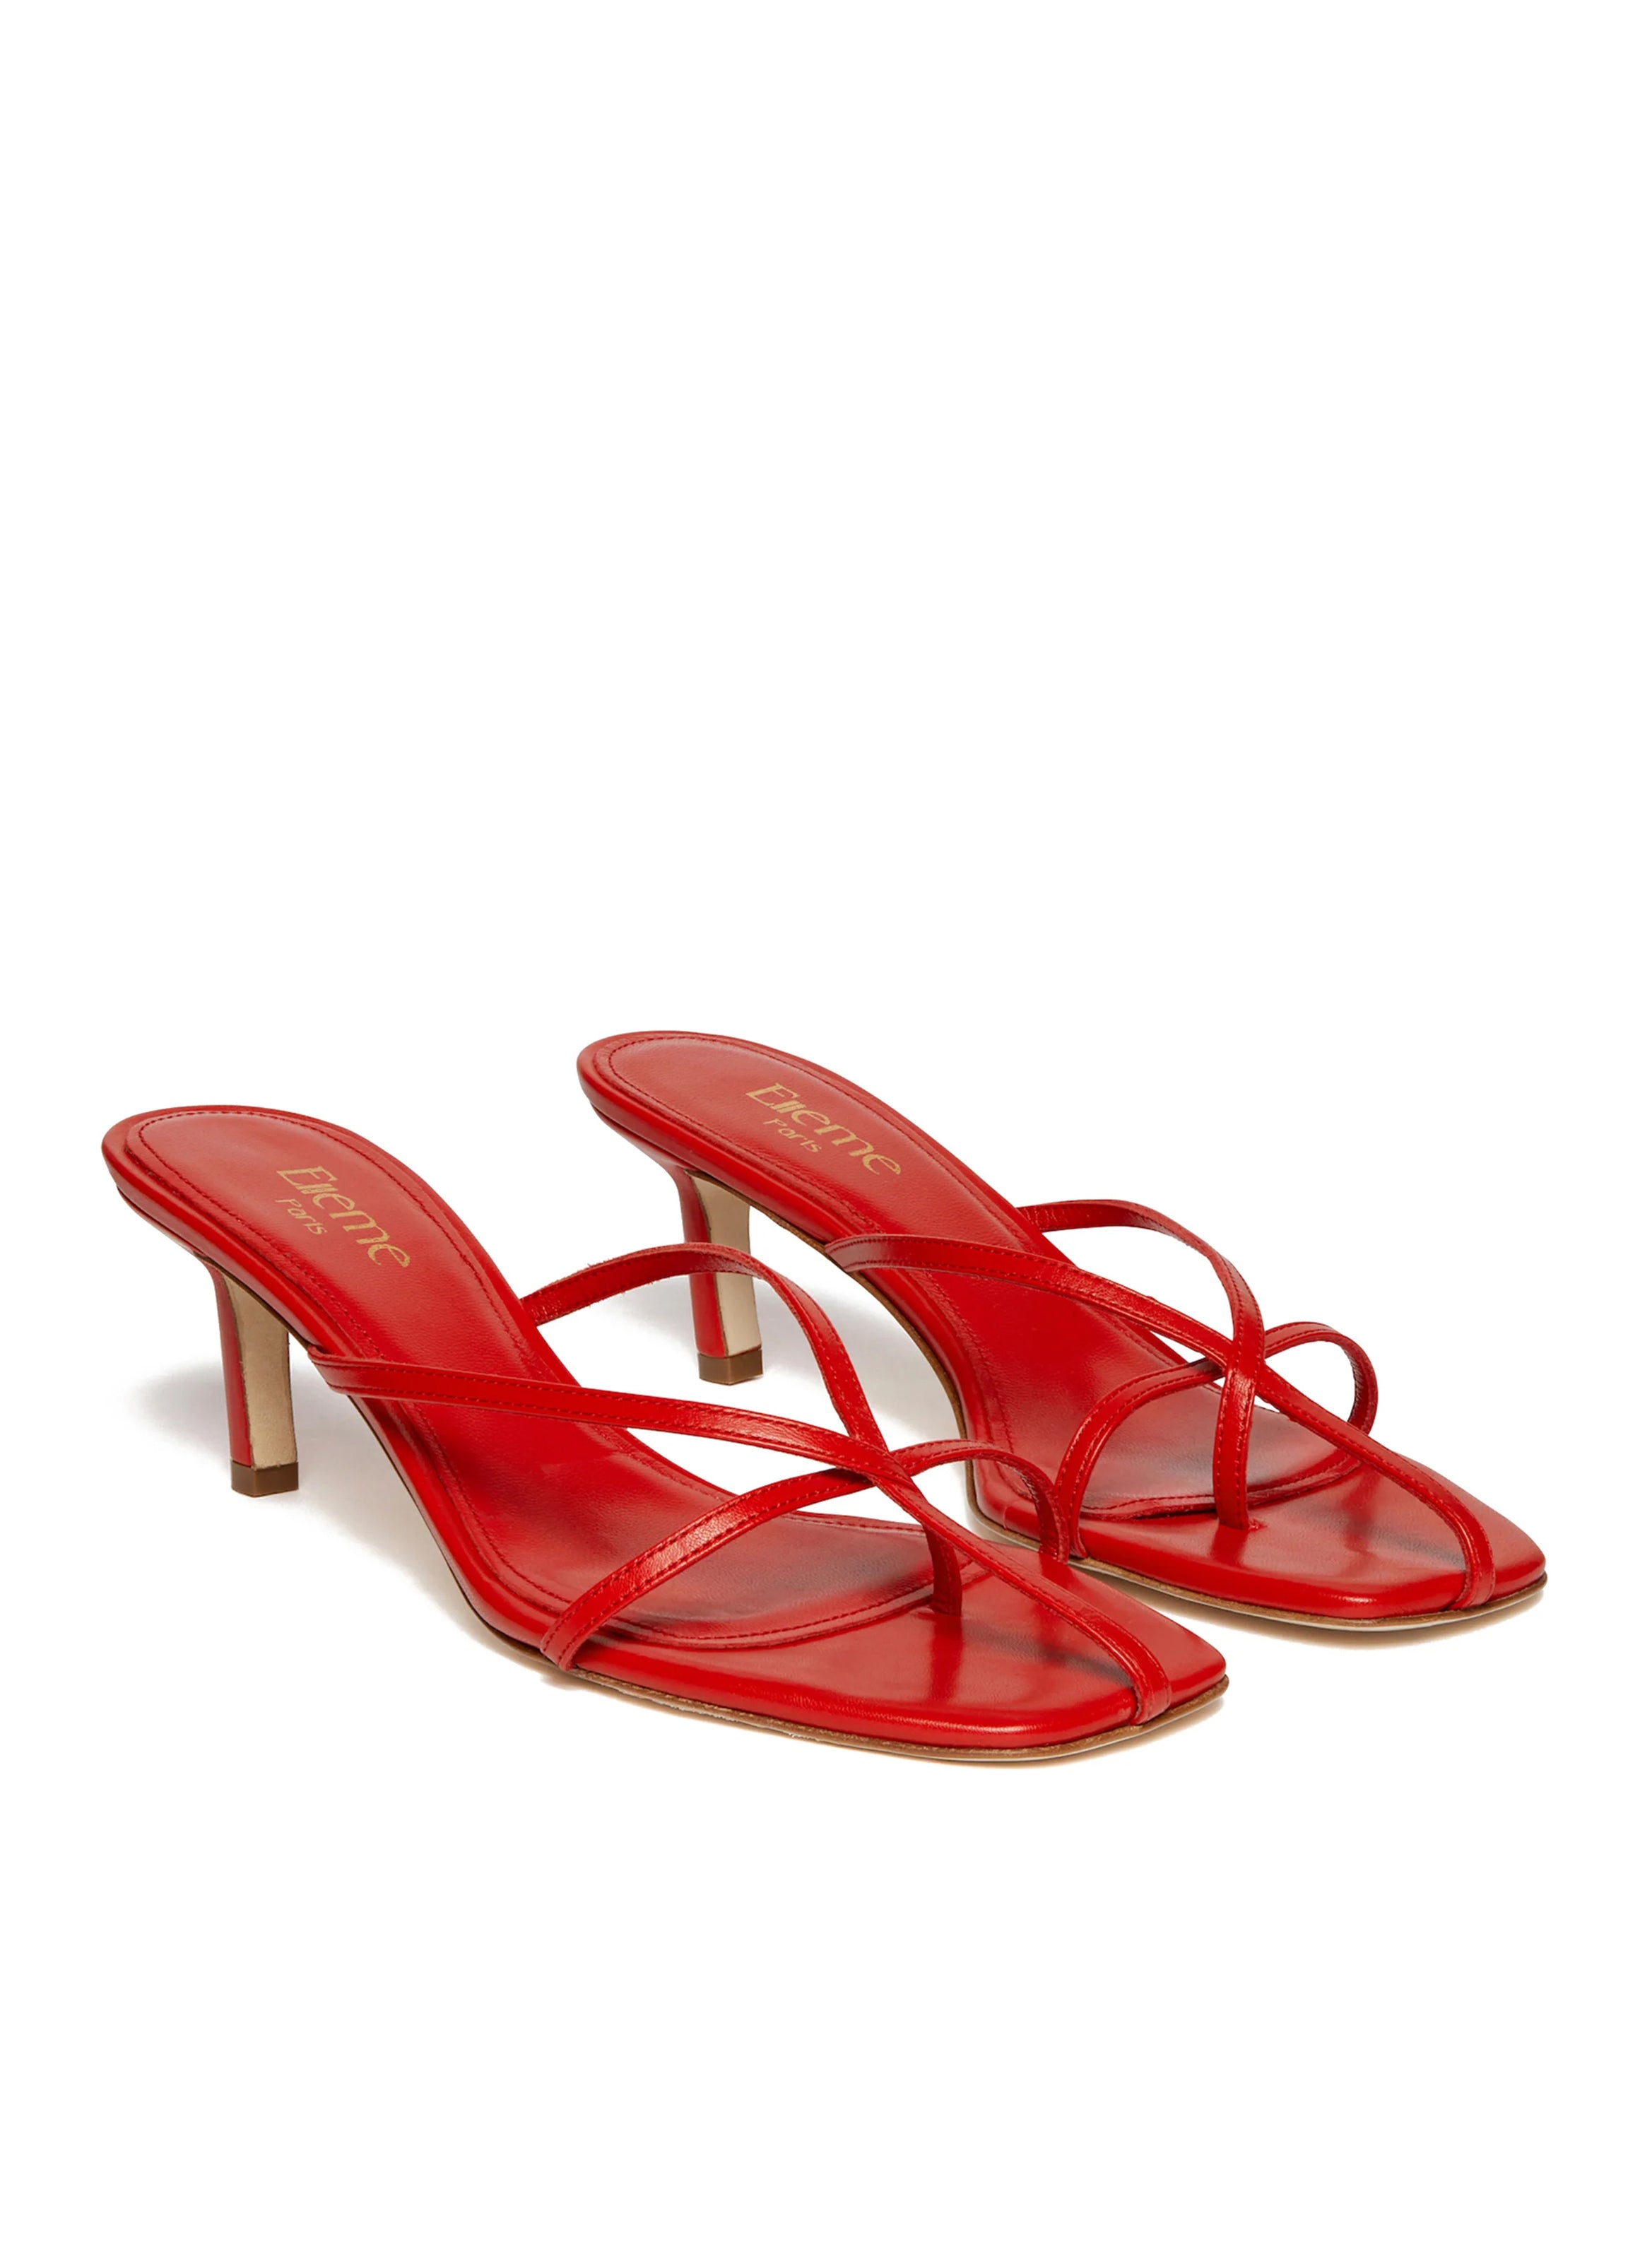 Women Red Patent Leather Pumps / Platform Red Bottom Shoes / Stiletto Heels EU Size 38 / Poland